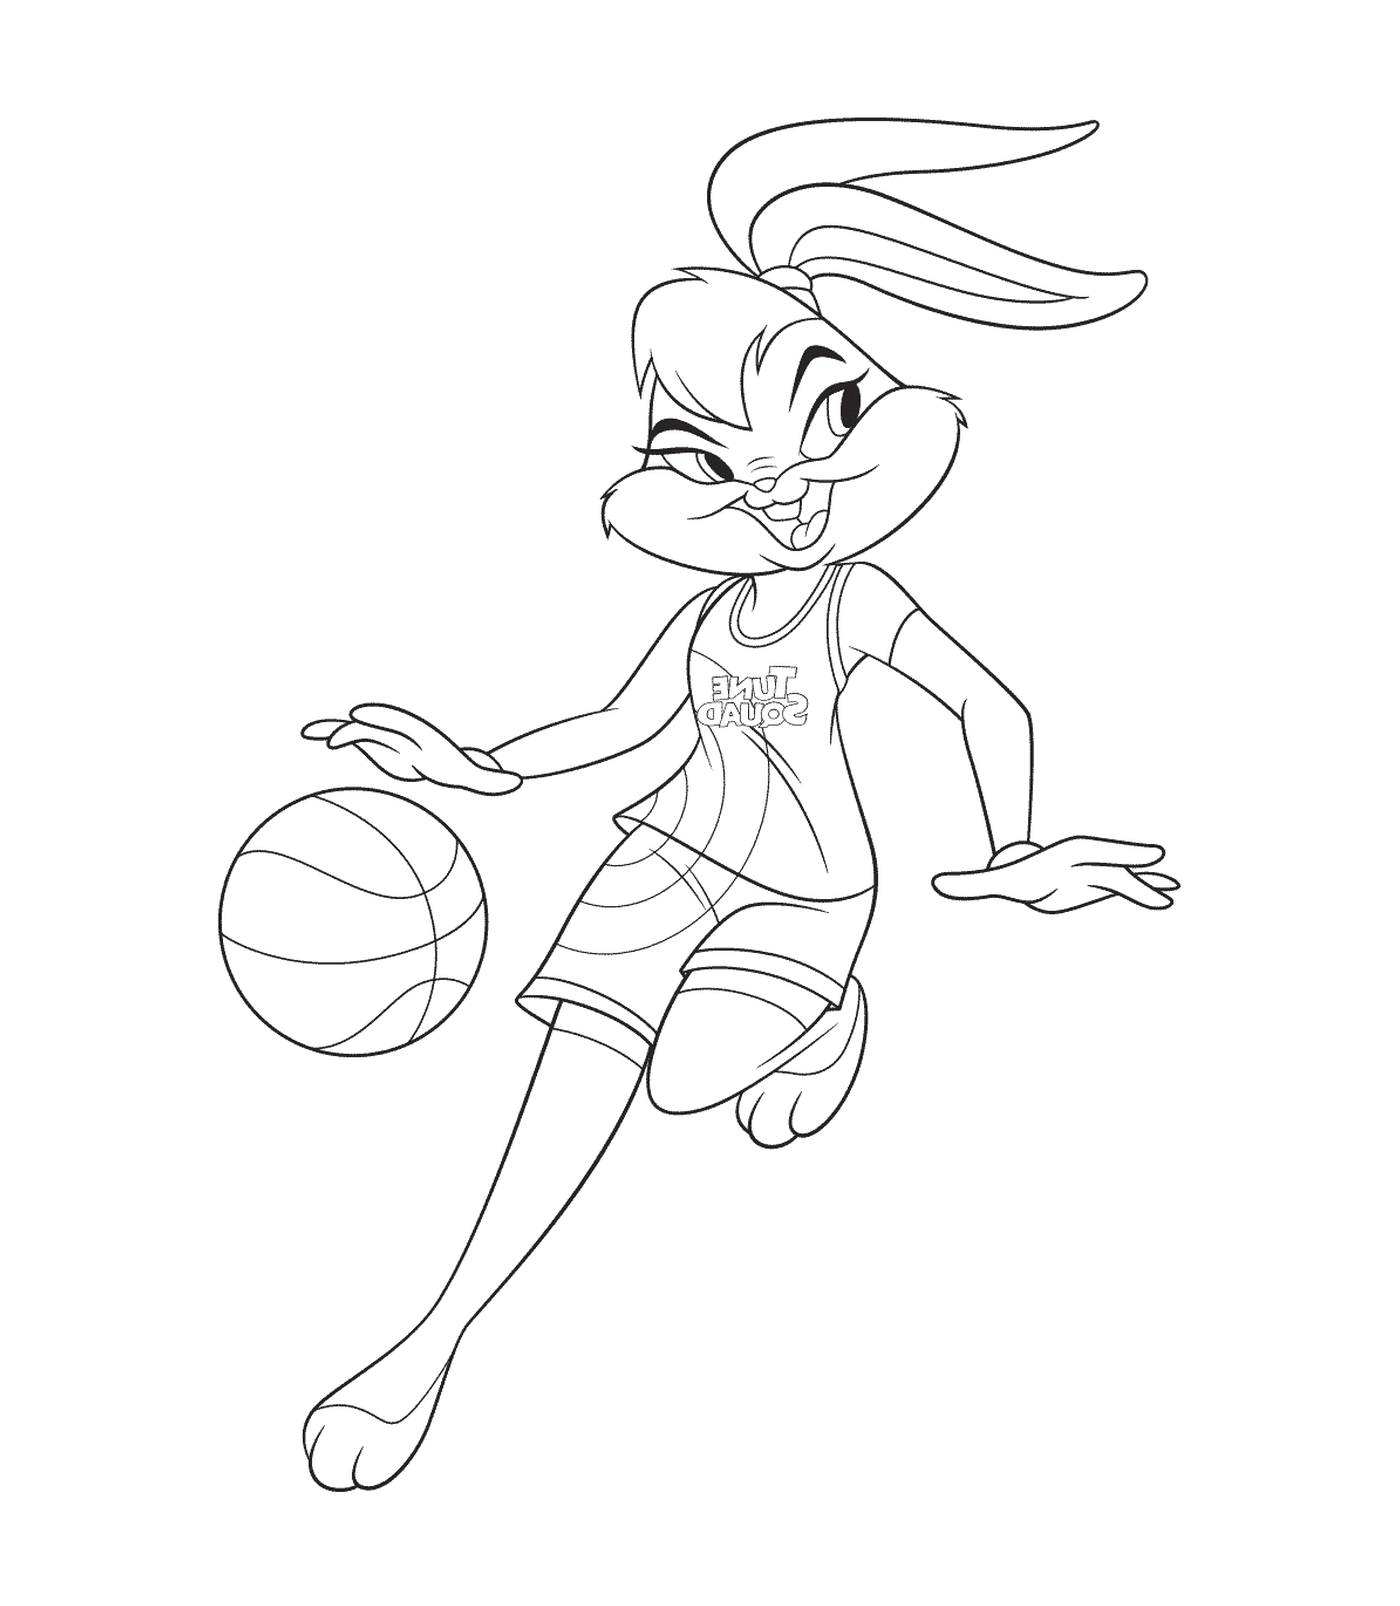   Lapin jouant au basket 